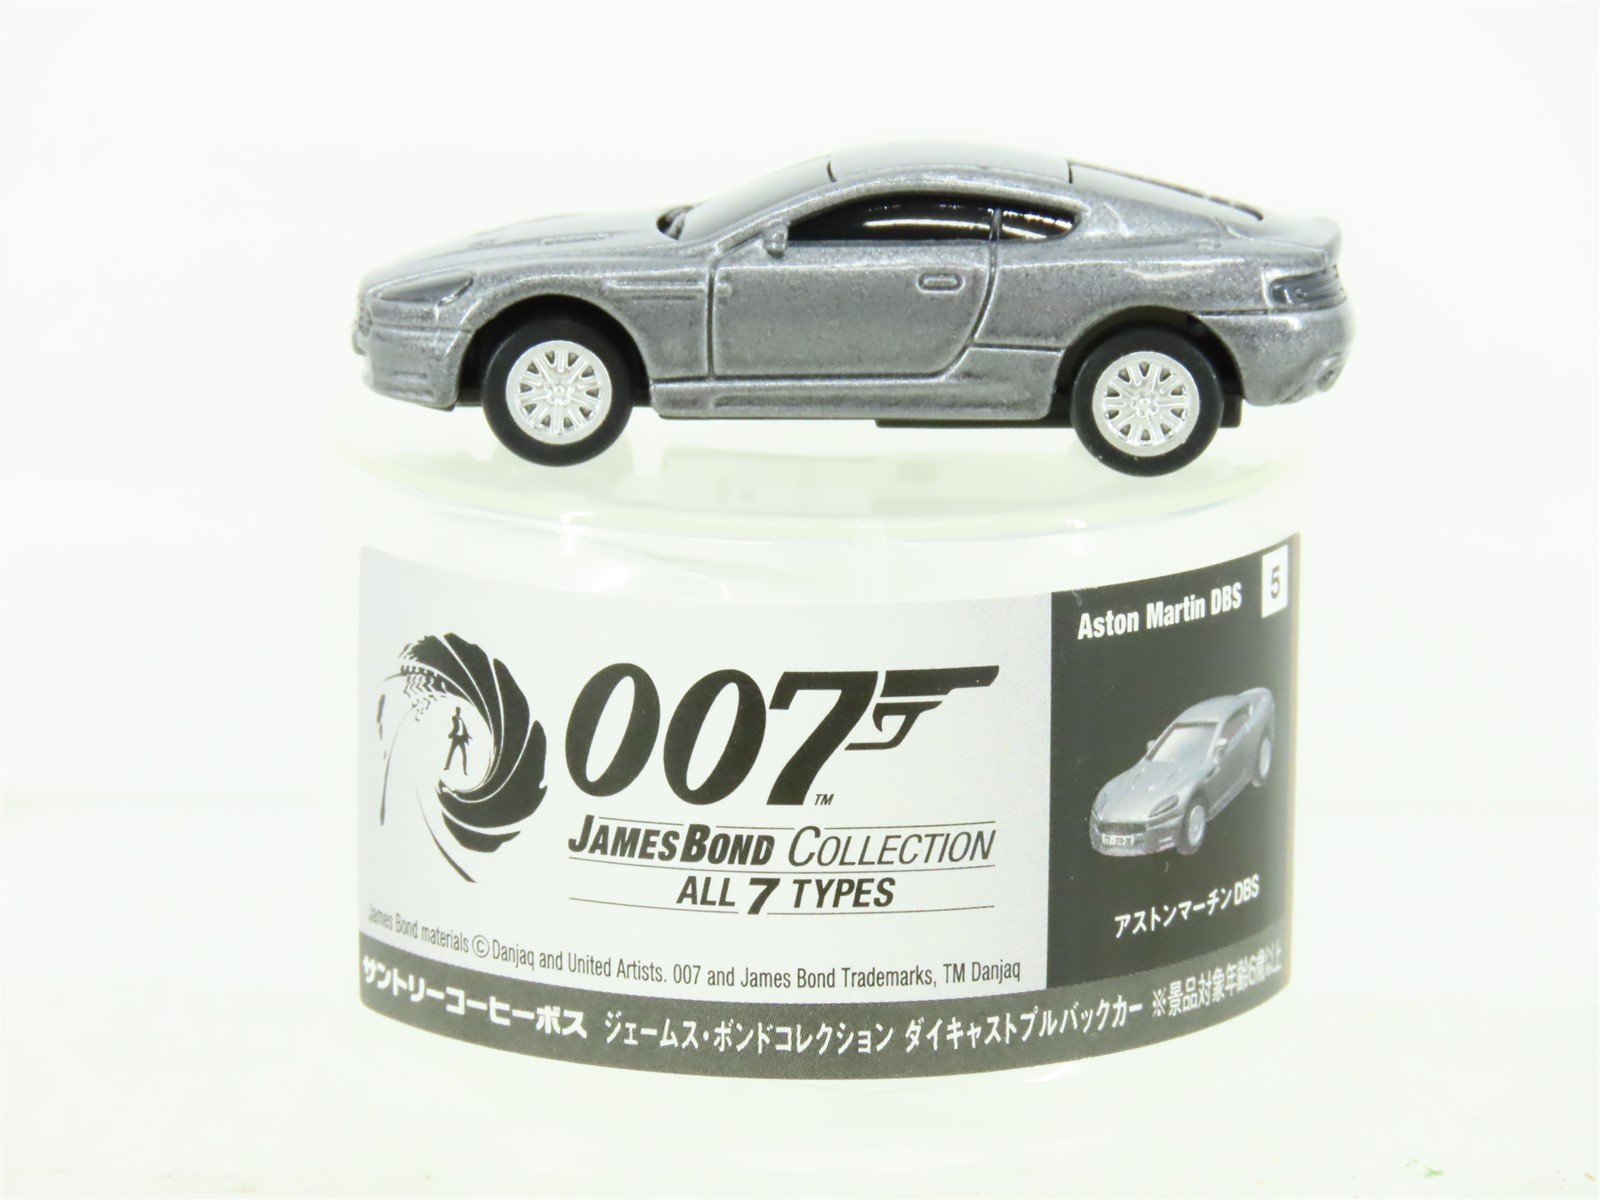 Danjaq Die-Cast Automobile 007 James Bond Collection Aston Martin DBS